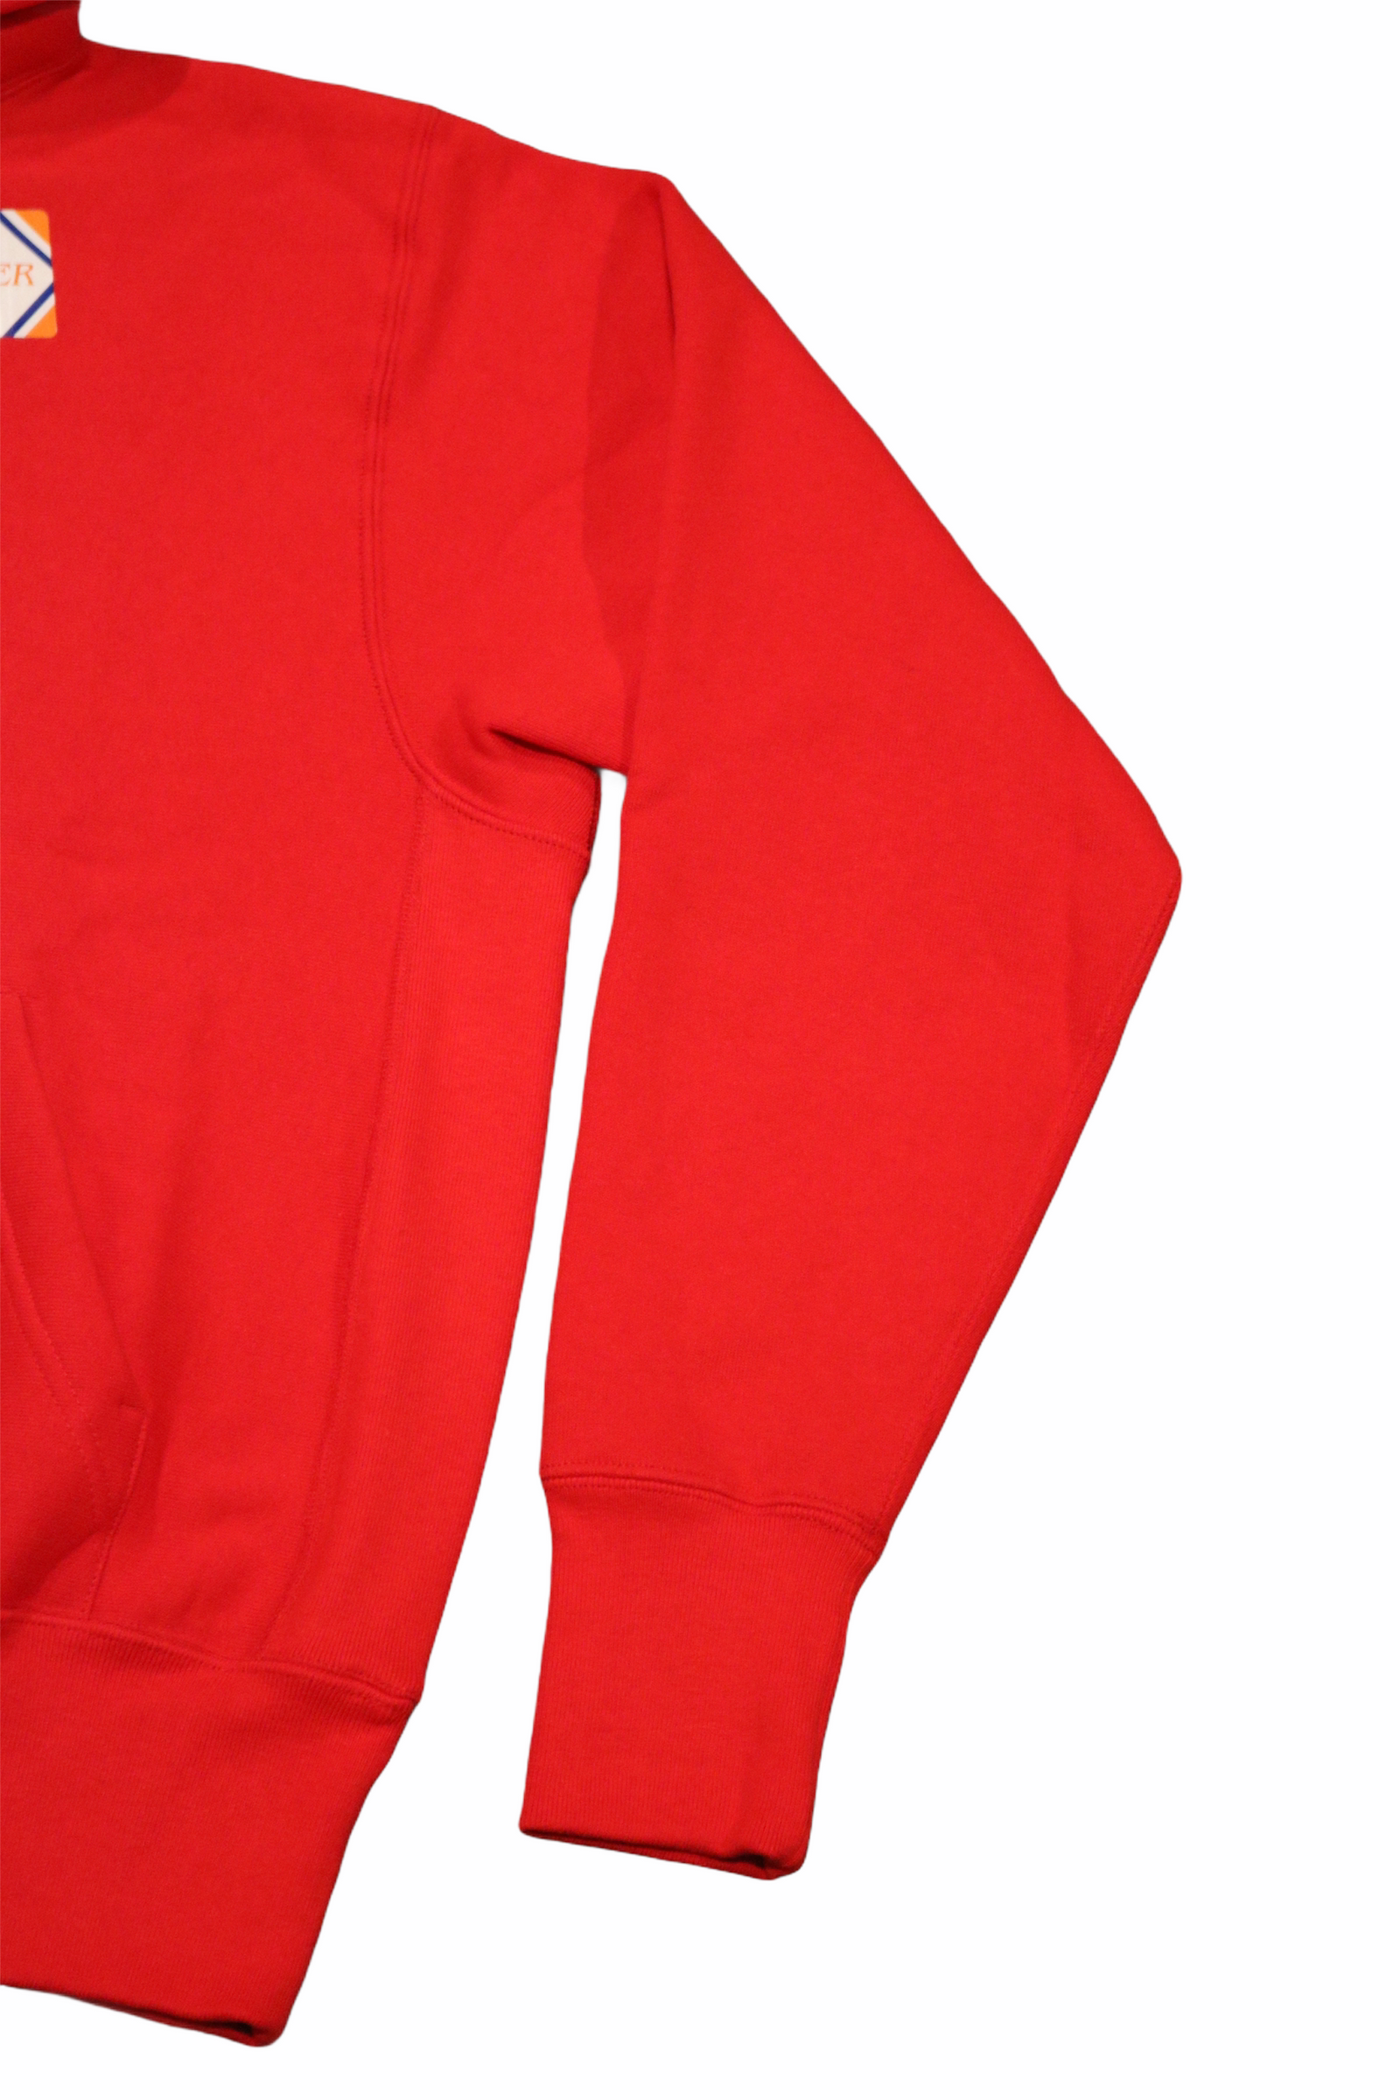 Camber USA : Crewneck Sweatshirt : Red